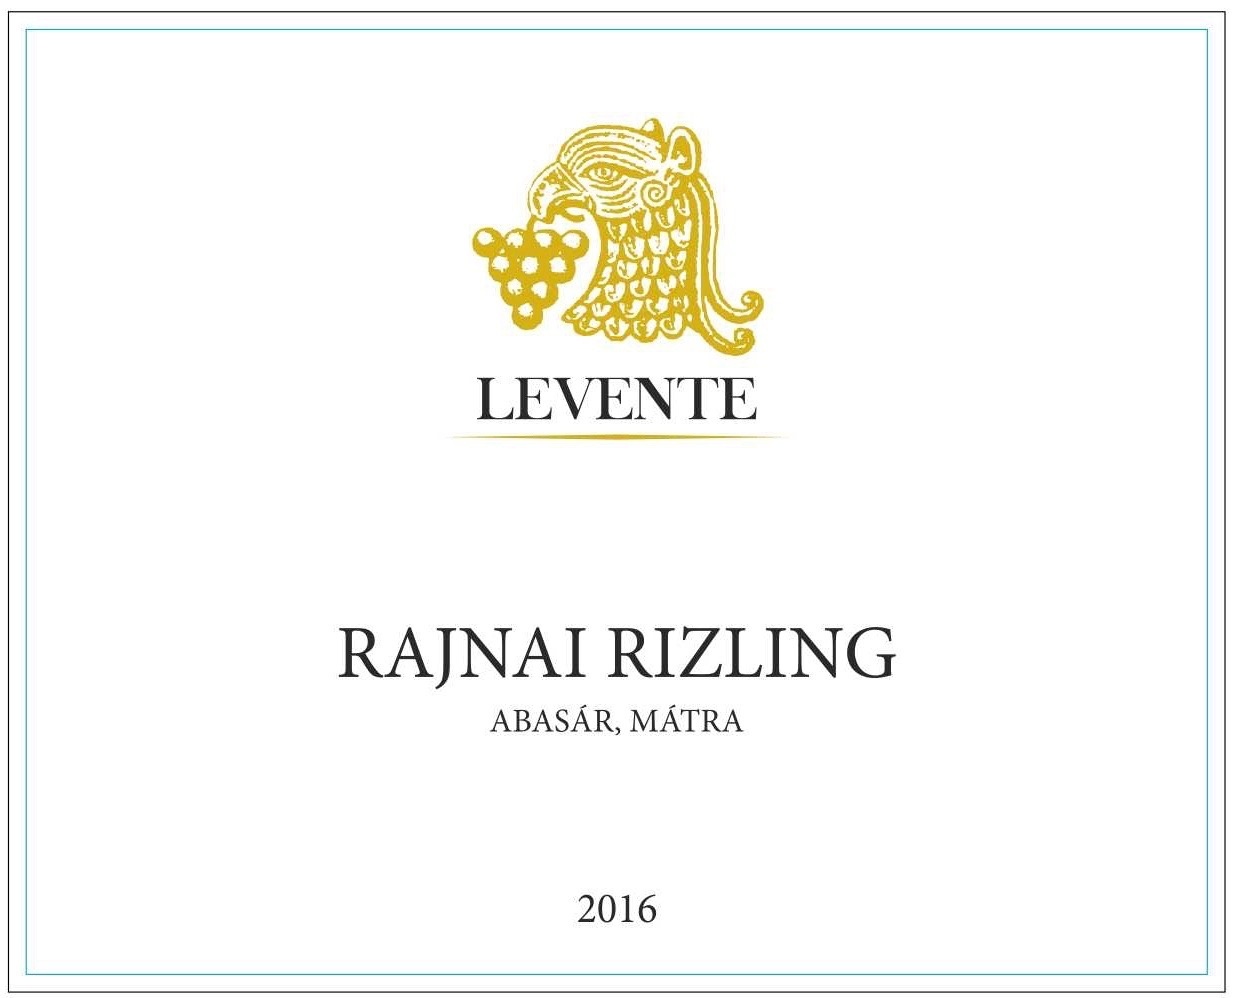 LeventeRajnai Rizling 2016